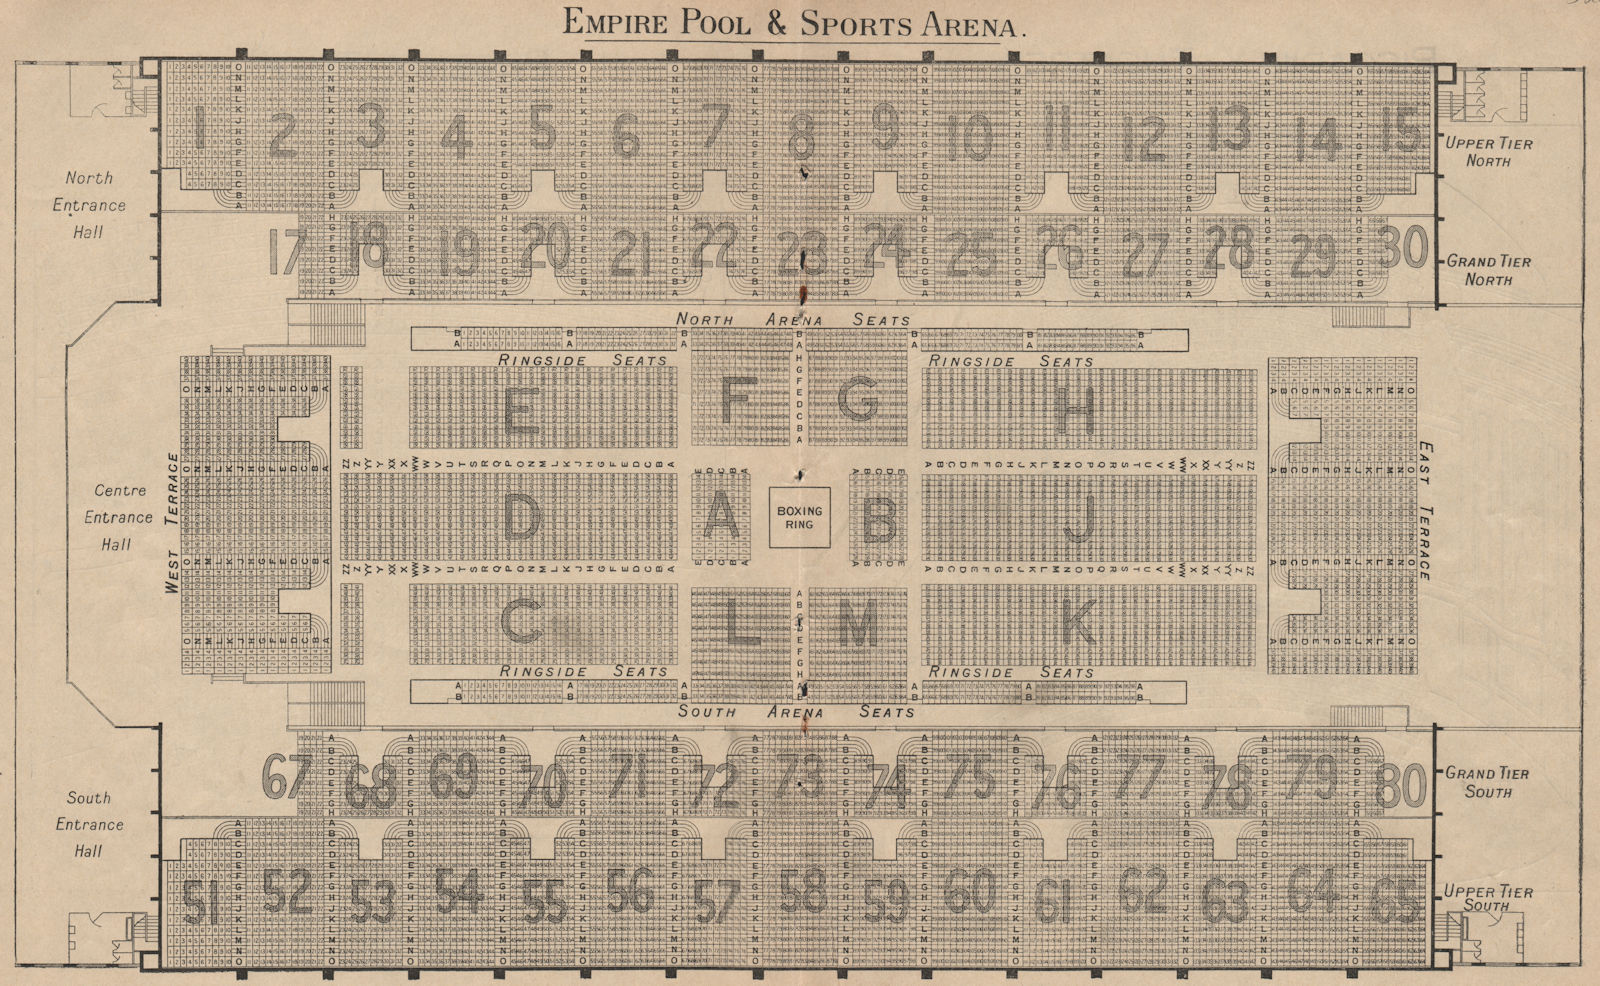 EMPIRE POOL & SPORTS ARENA. Vintage seating plan. Boxing ring. London 1936